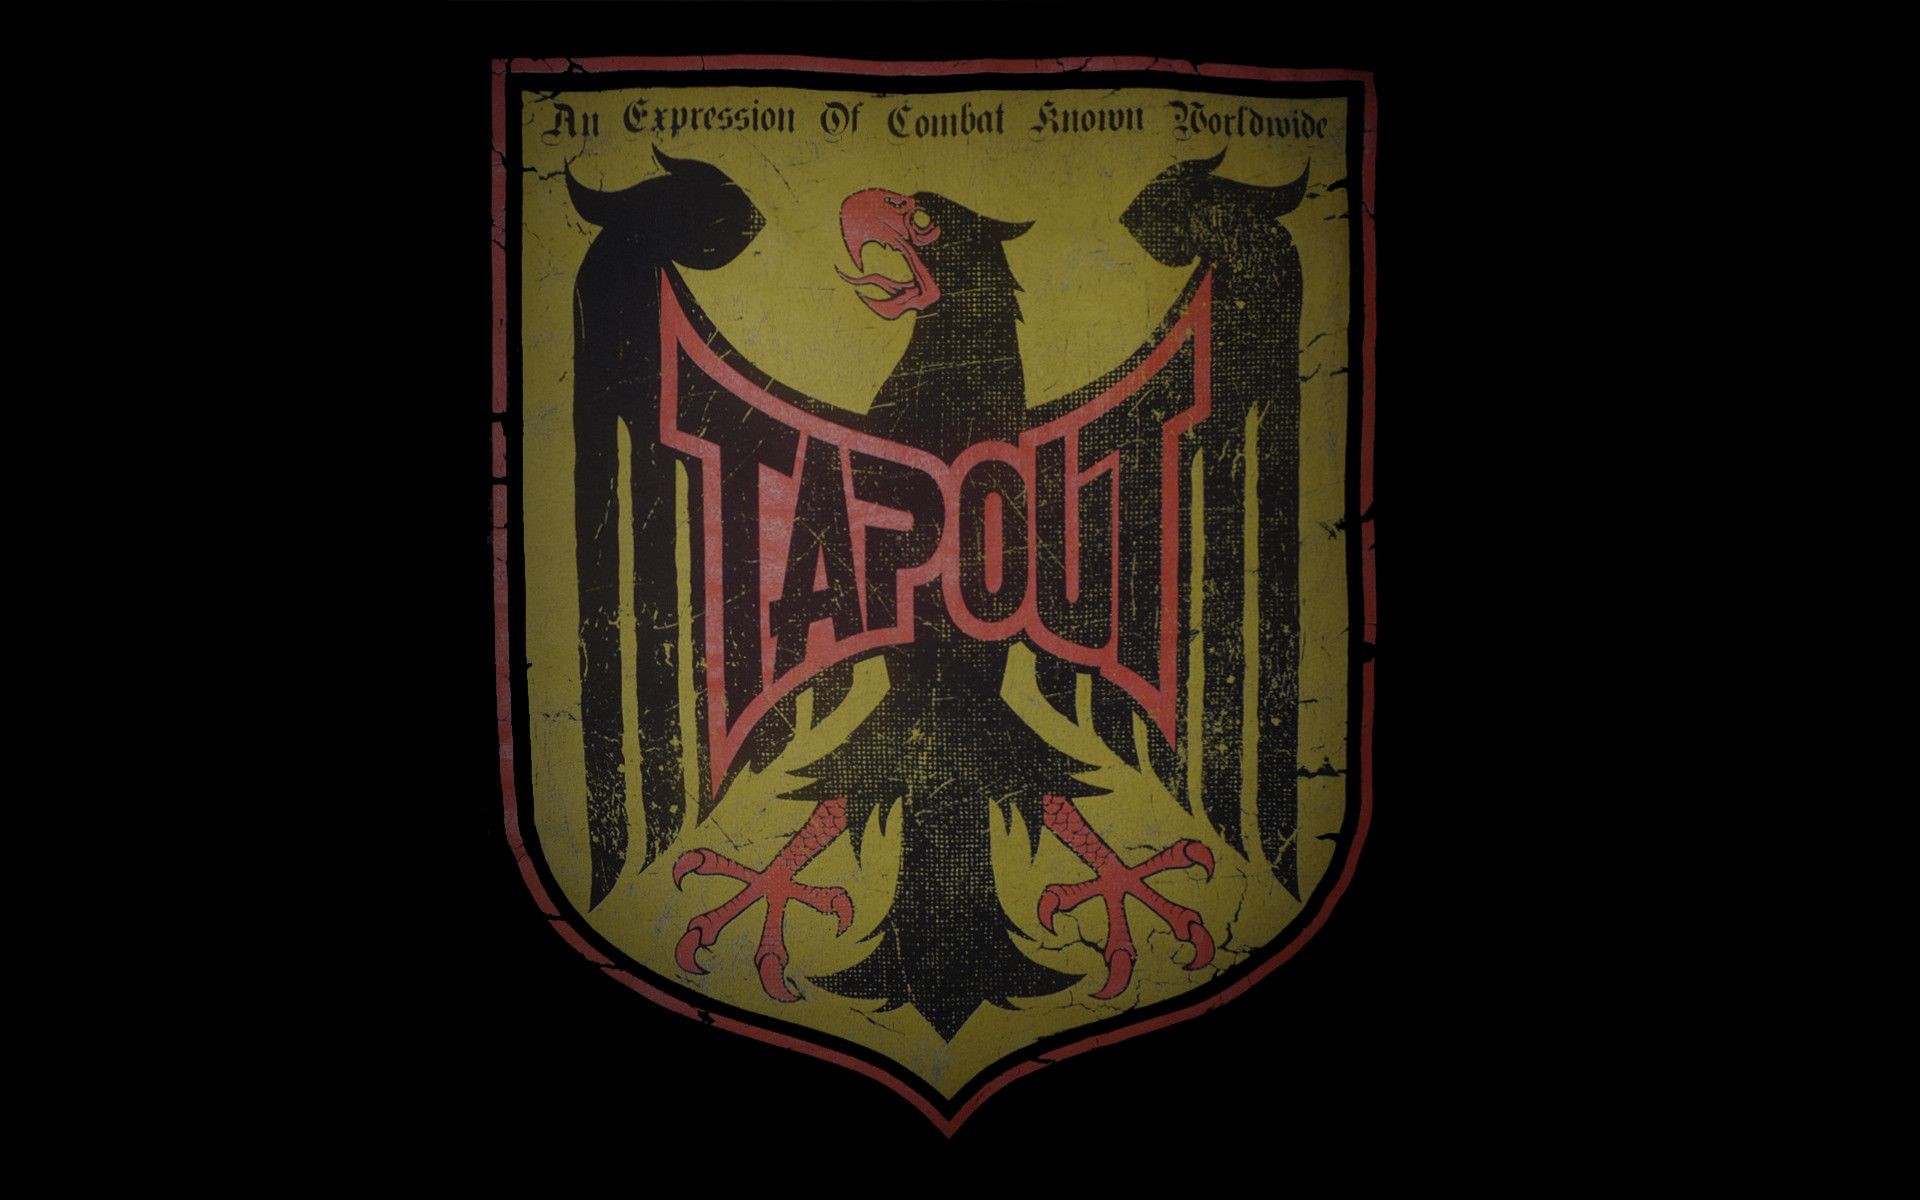 1920x1200 ... Tapout Wallpapers - WallpaperSafari ...